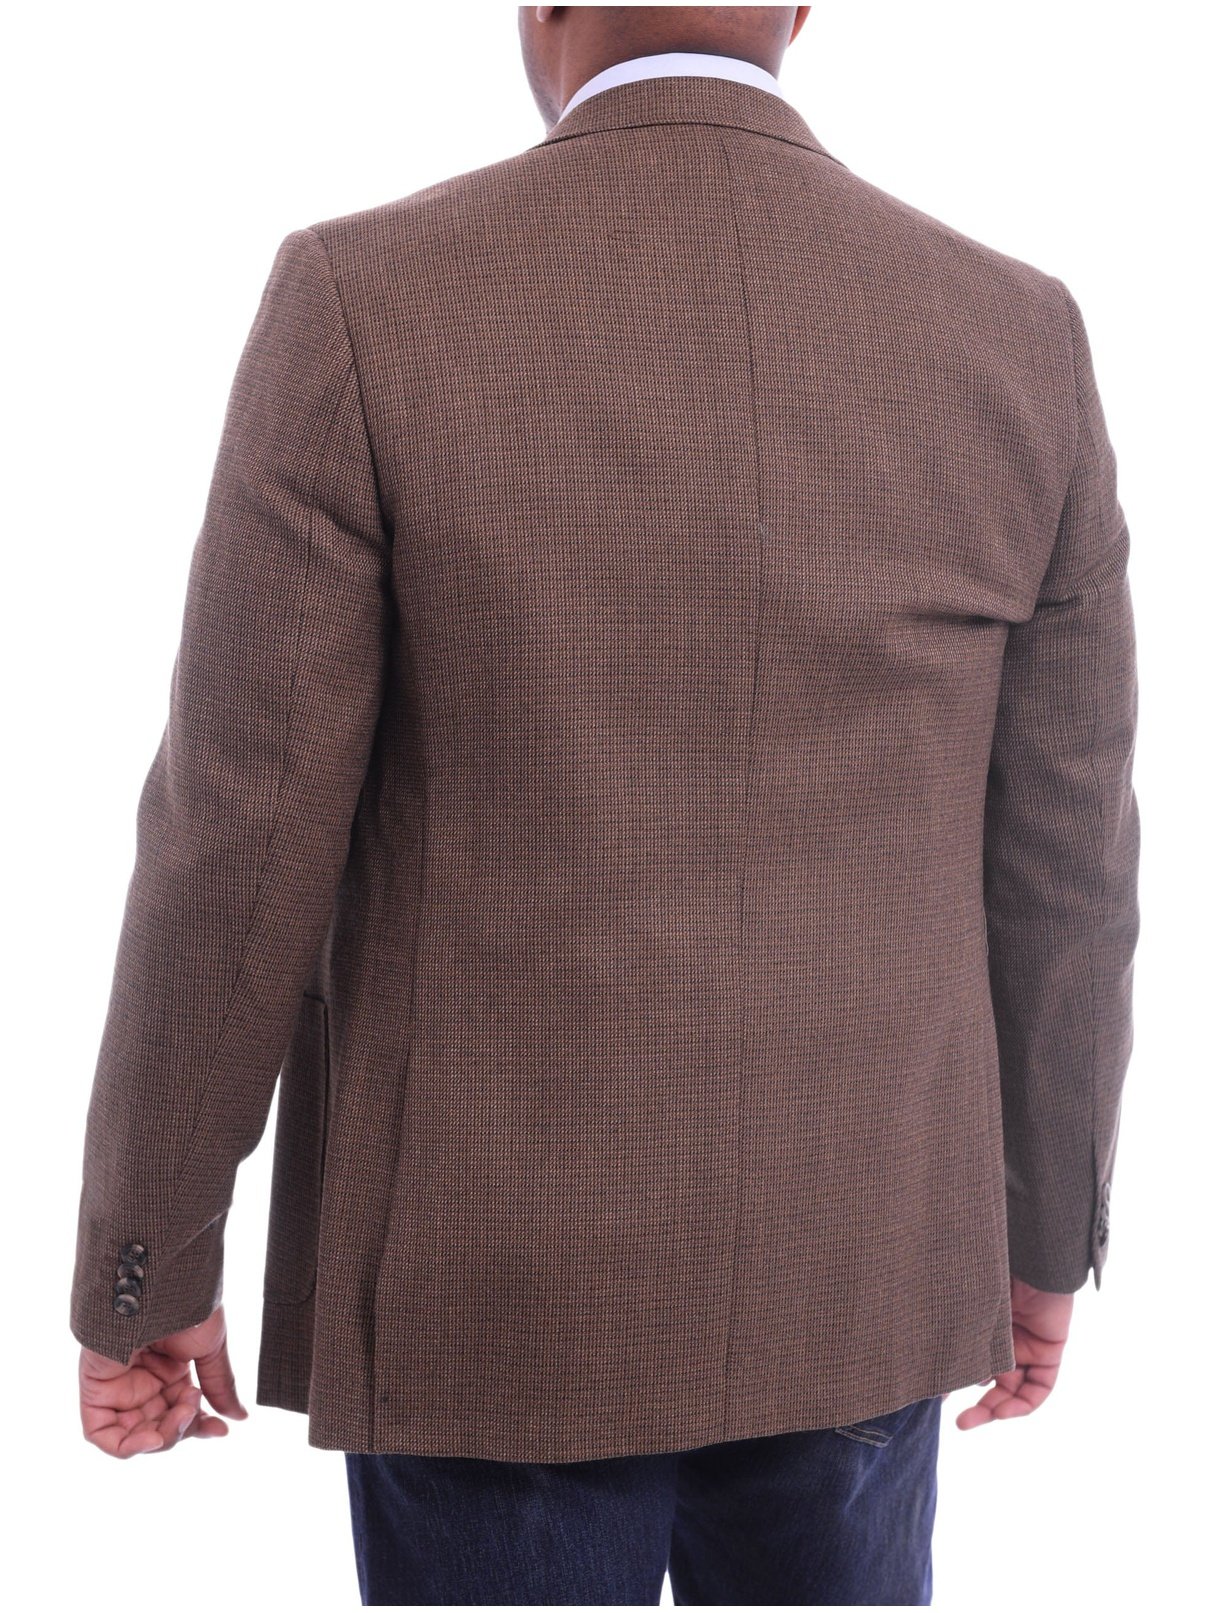 Prontomoda BLAZERS Prontomoda Classic Fit Brown Textured Lambs Wool Blazer Sportcoat Patch Pockets